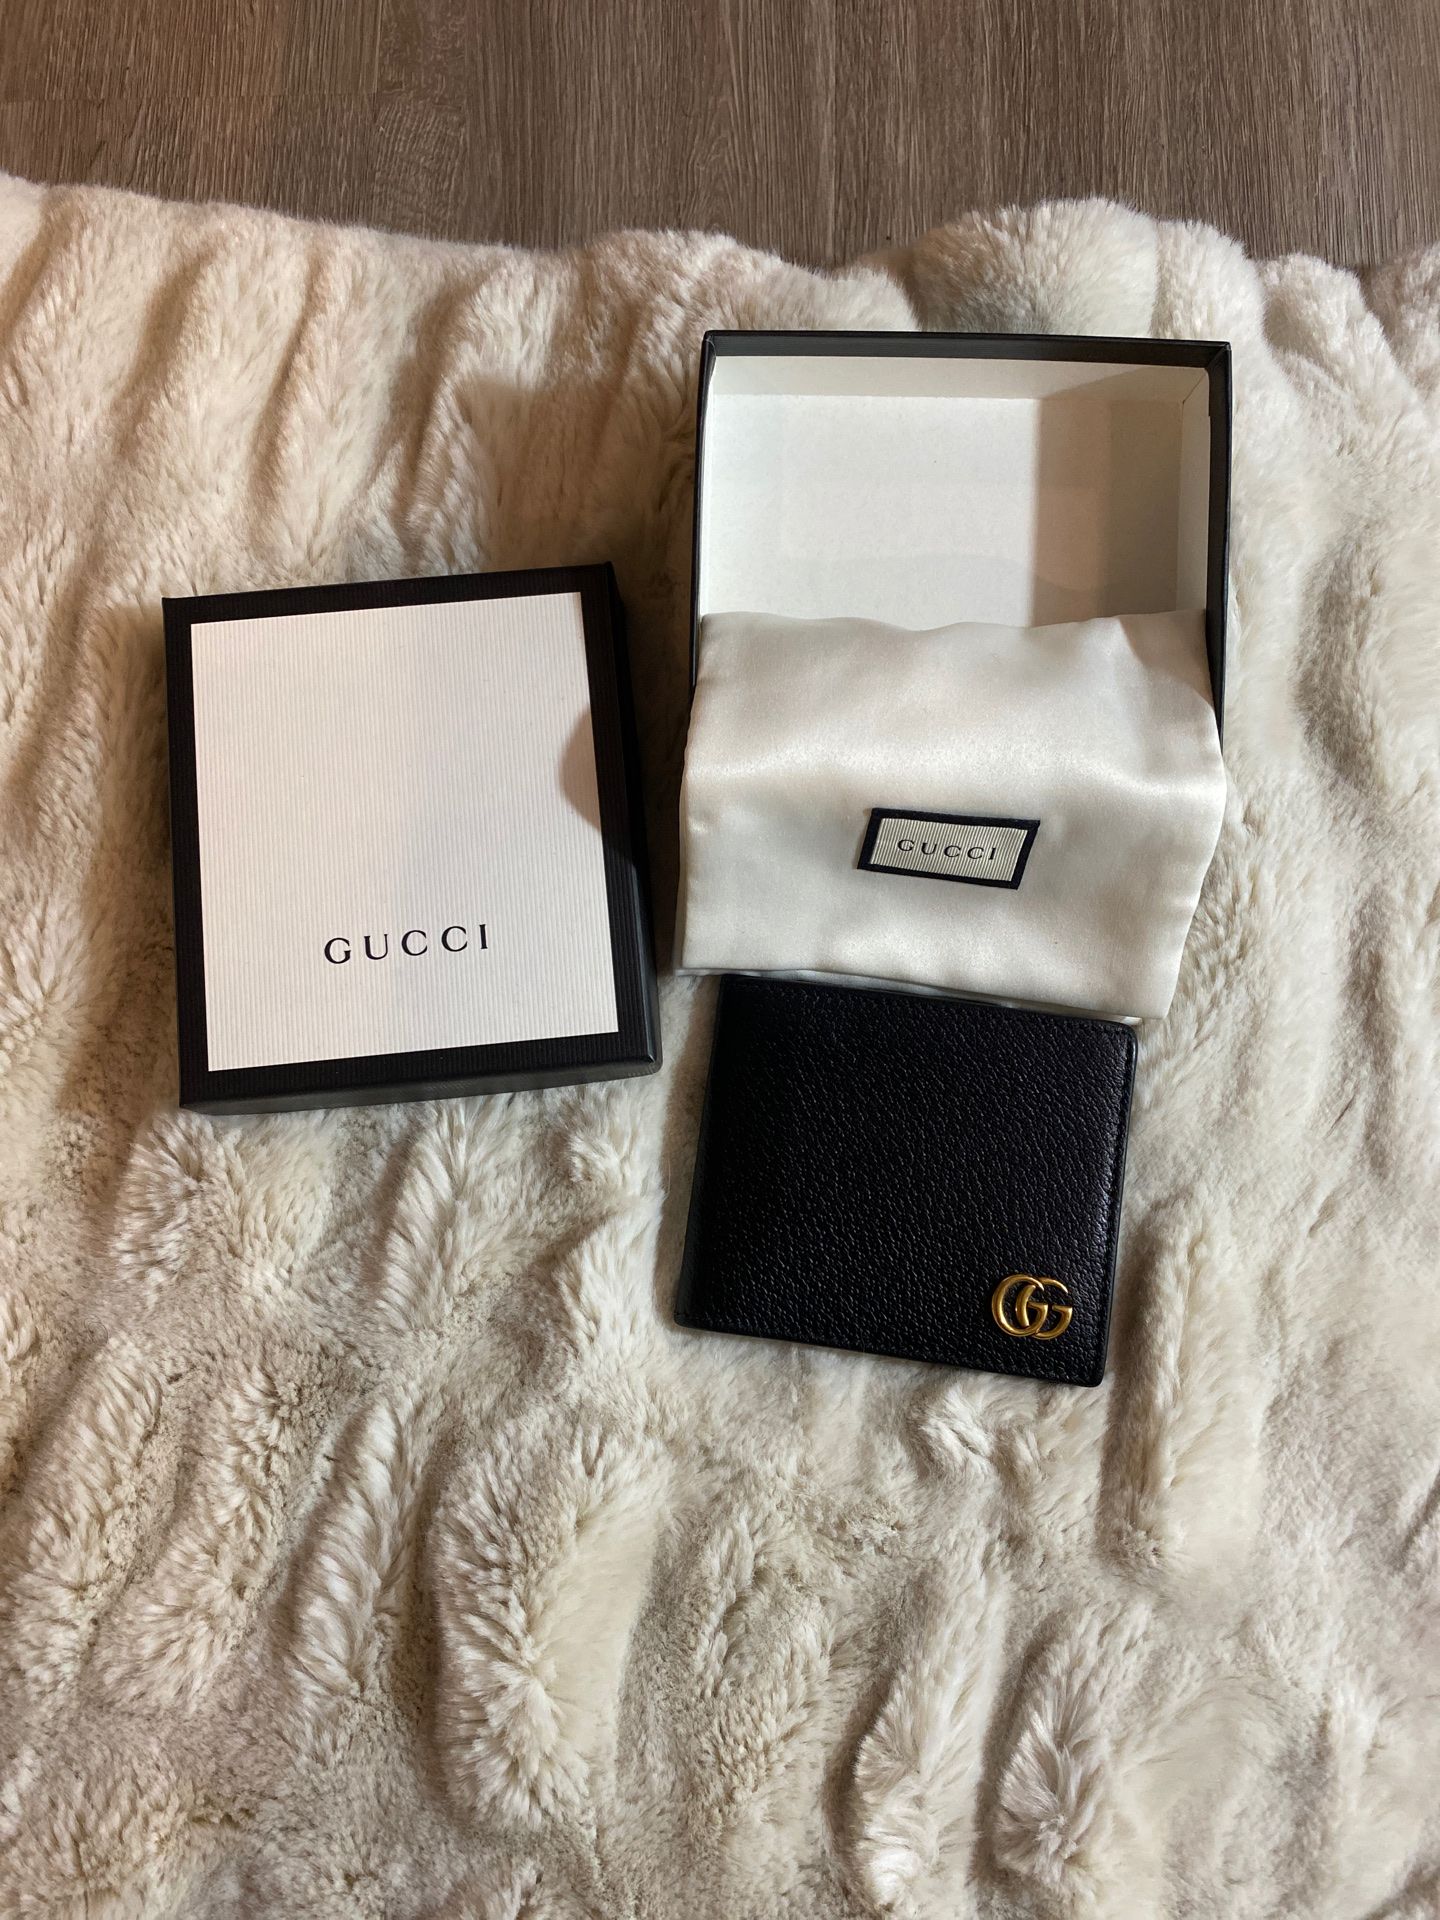 Gucci Men’s wallet